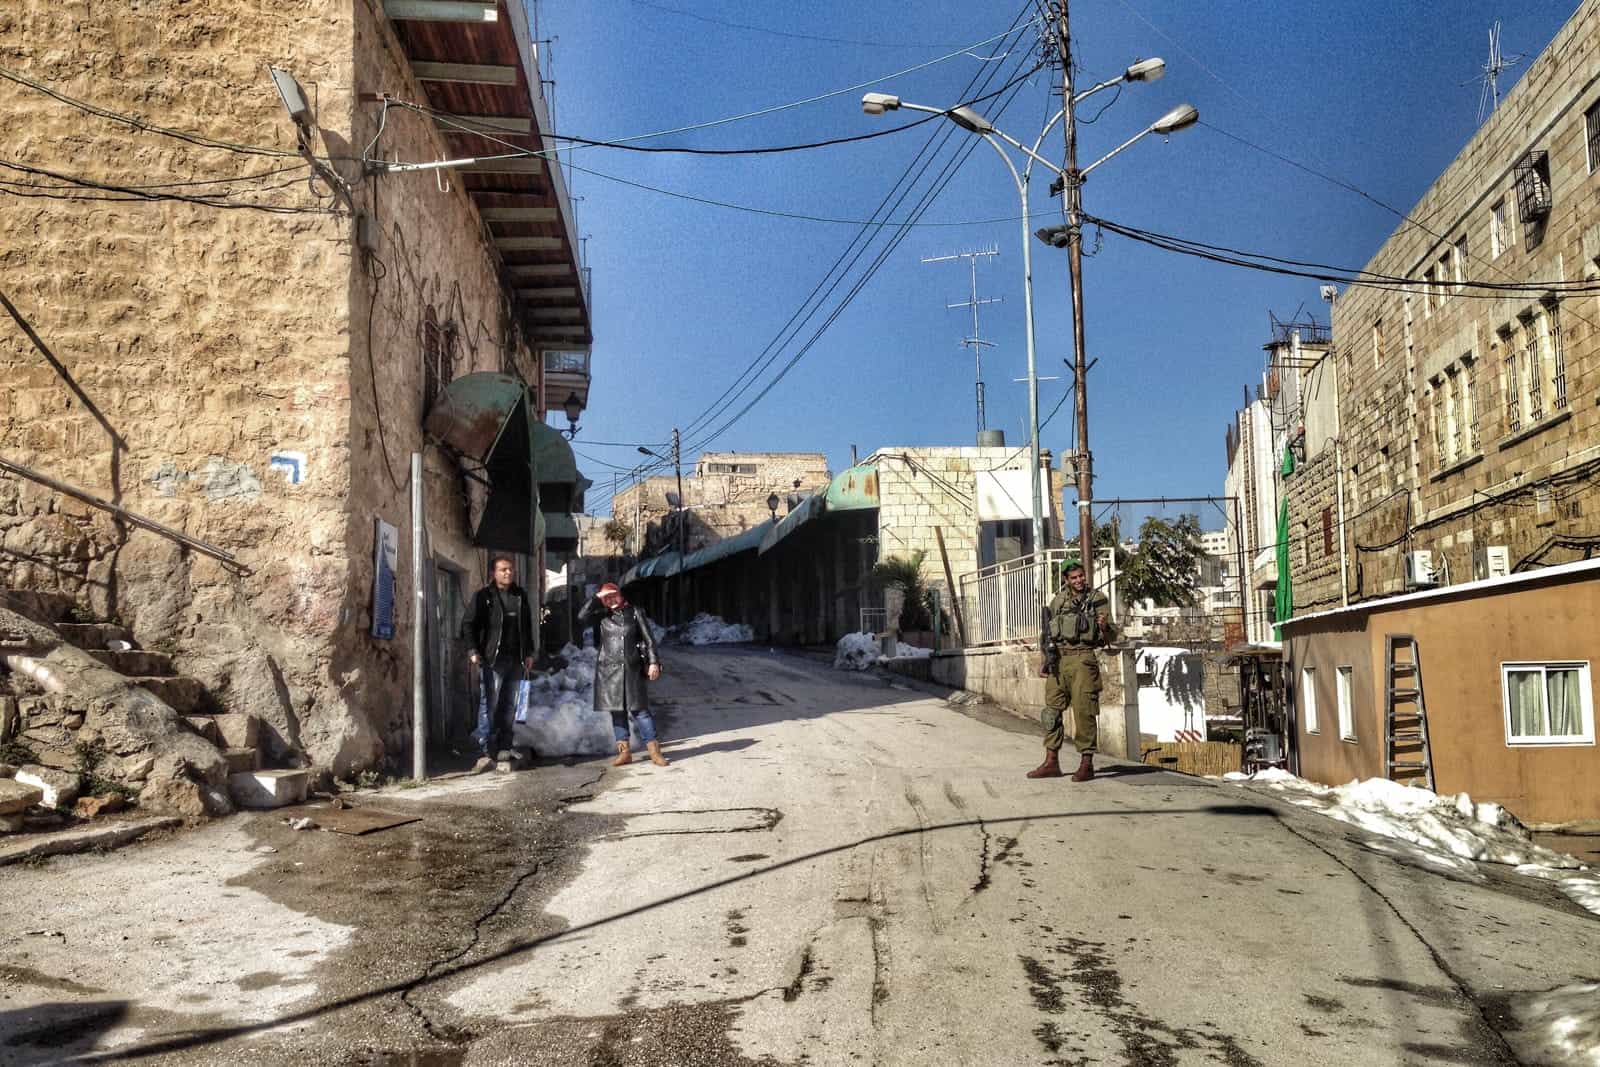 Entering the Arab side of Hebron on ‘Apartheid Street’ (Shuhada Street) on a tour